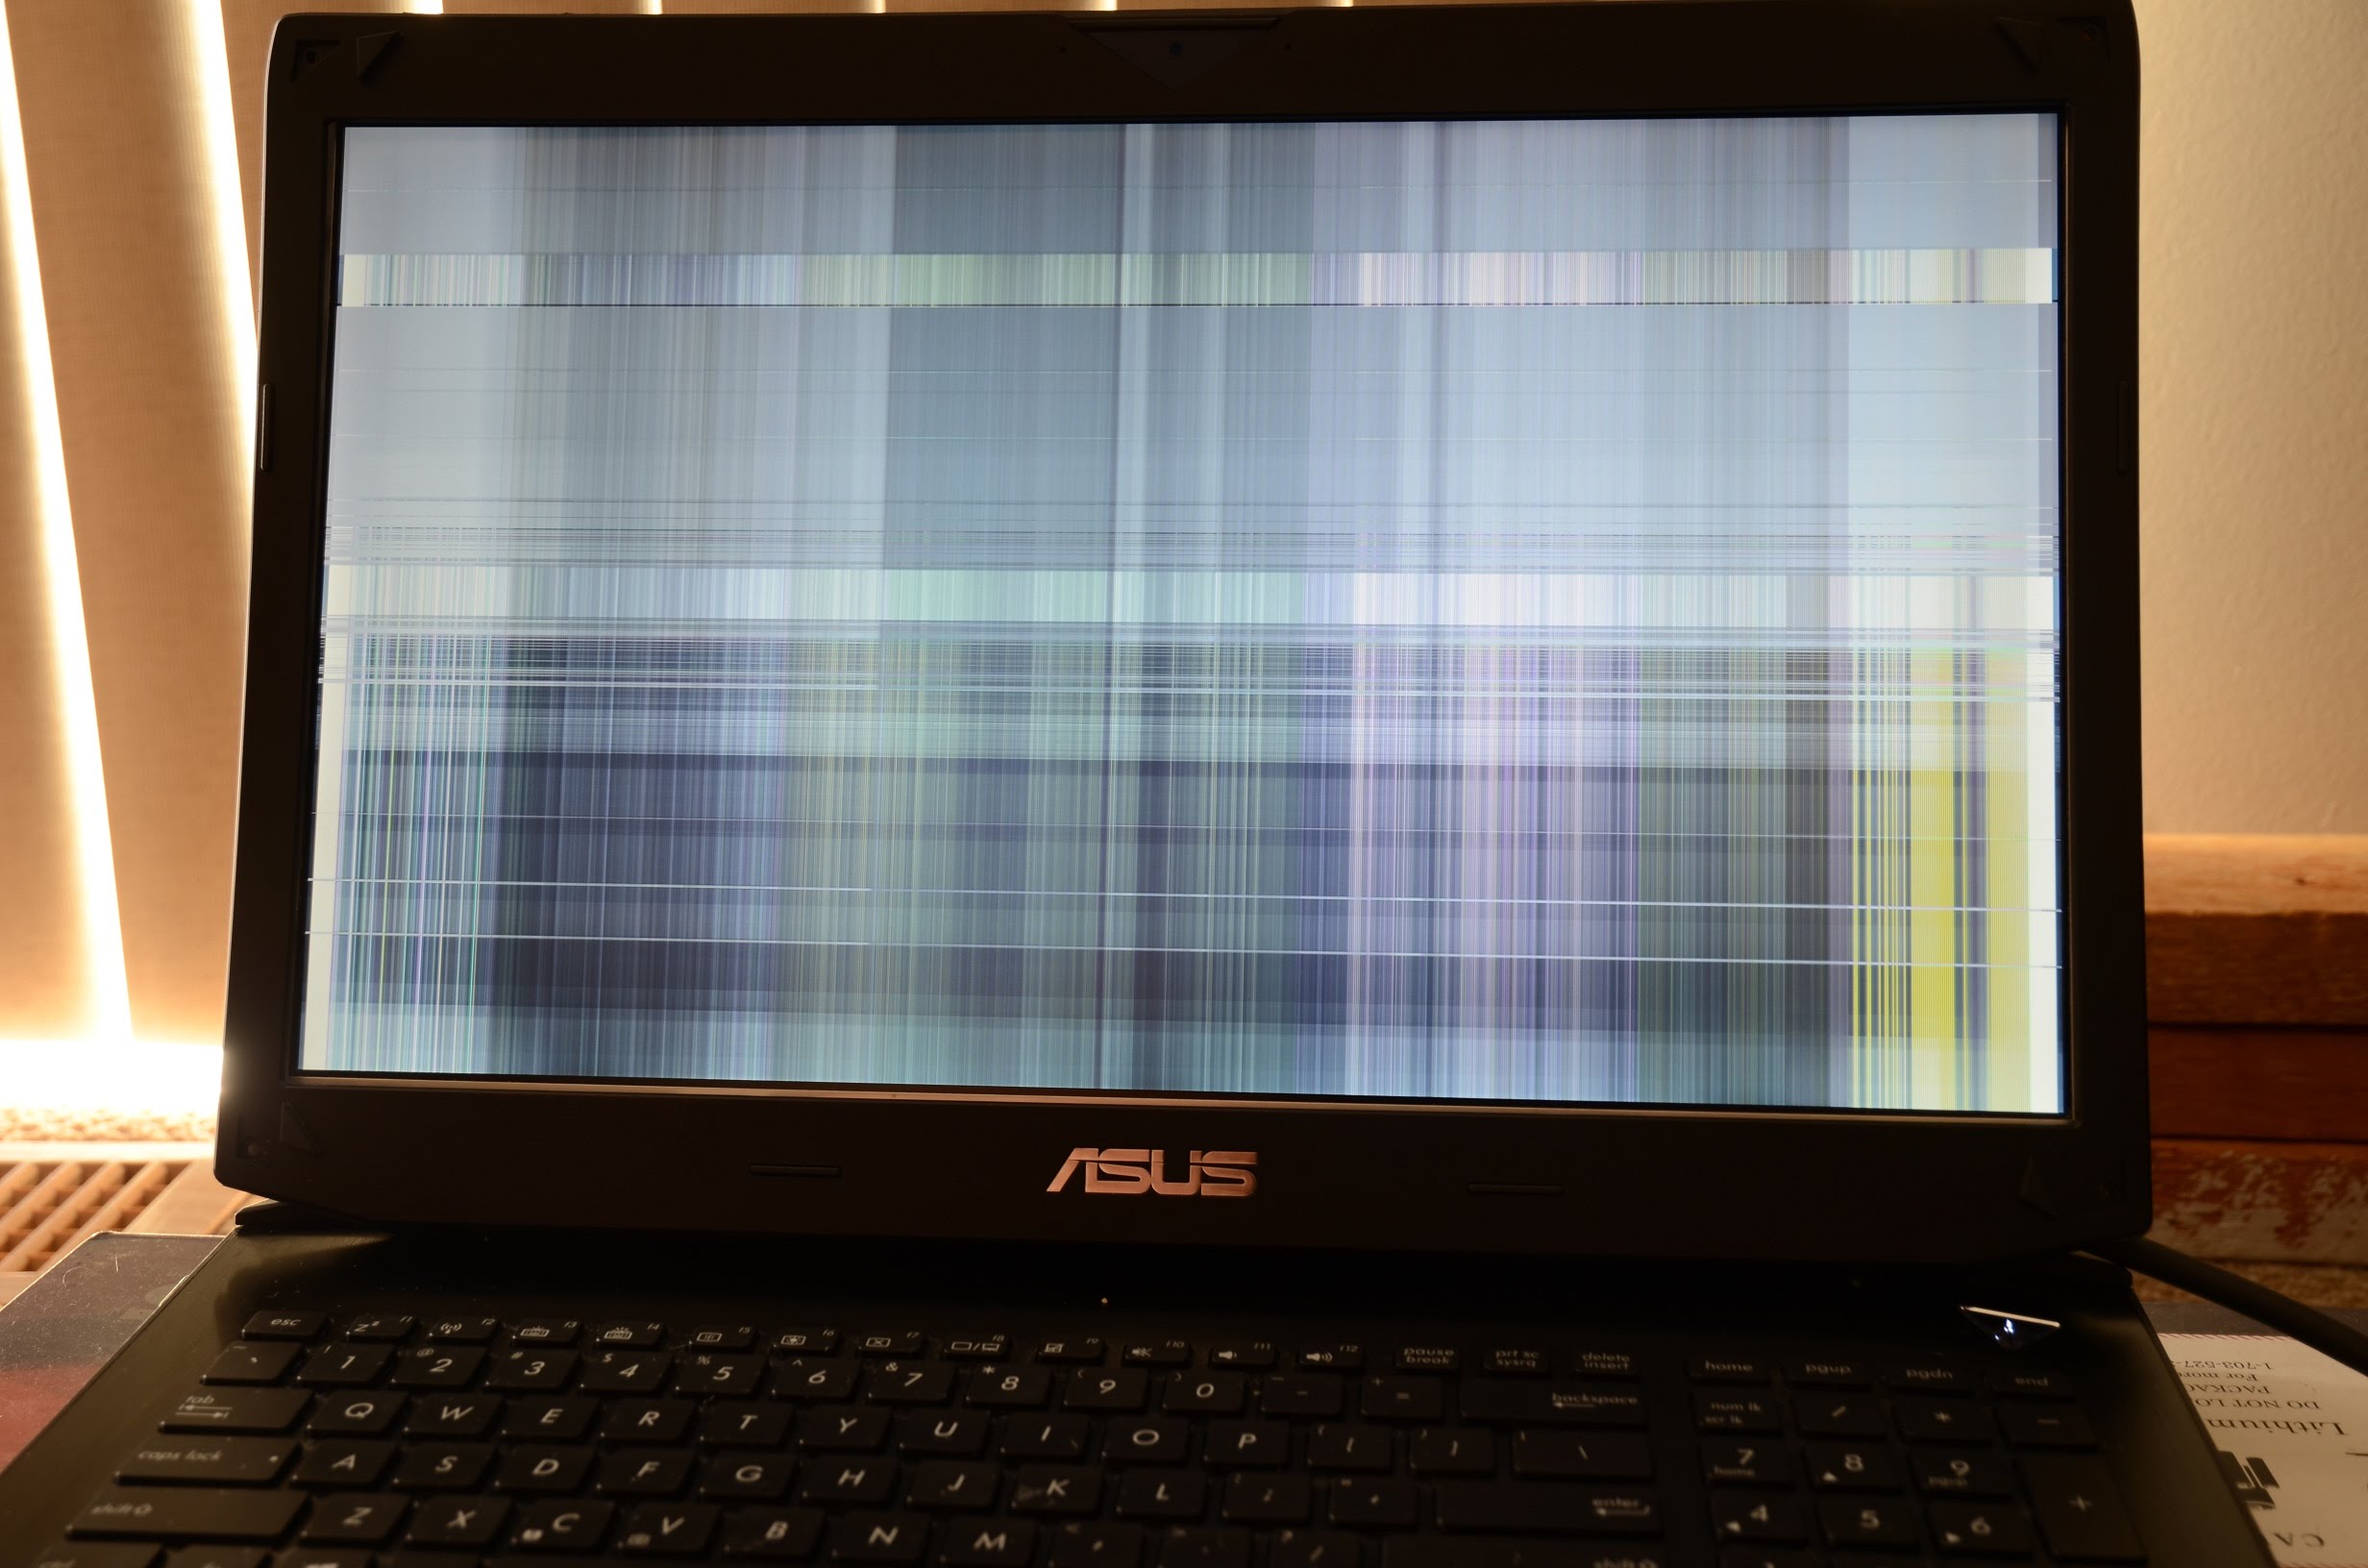 Сдвинут экран ноутбука. ASUS Laptop's Screen. Монитор ноутбука асус. Разбитый экран ноутбука. Ноутбук с разбитым экраном.